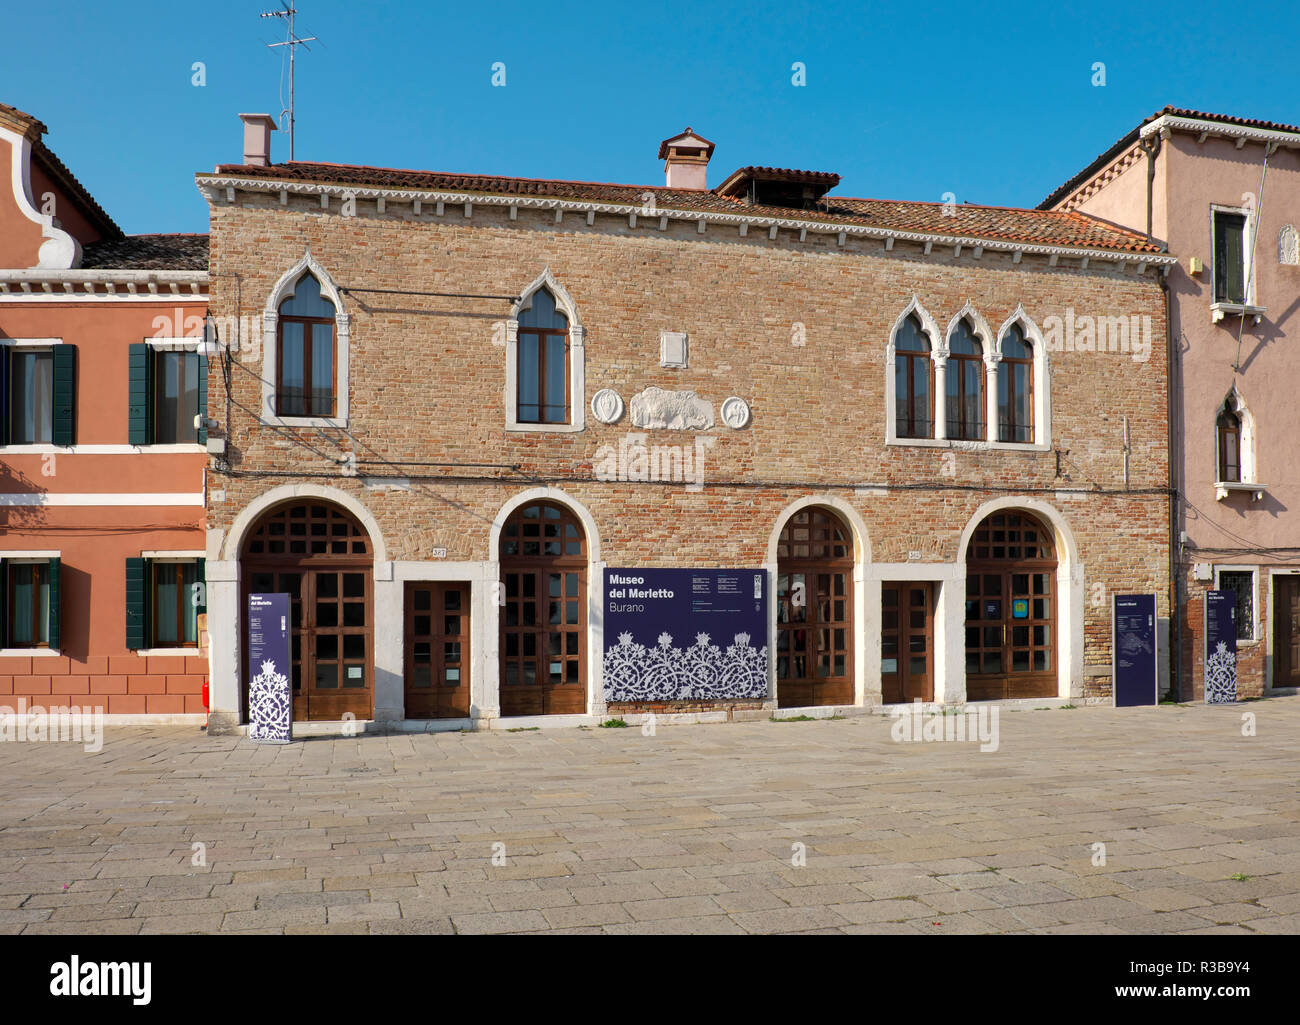 Museo del Merletto, Museum of Lace Embroidery, Island of Burano, Venice, Veneto, Italy Stock Photo